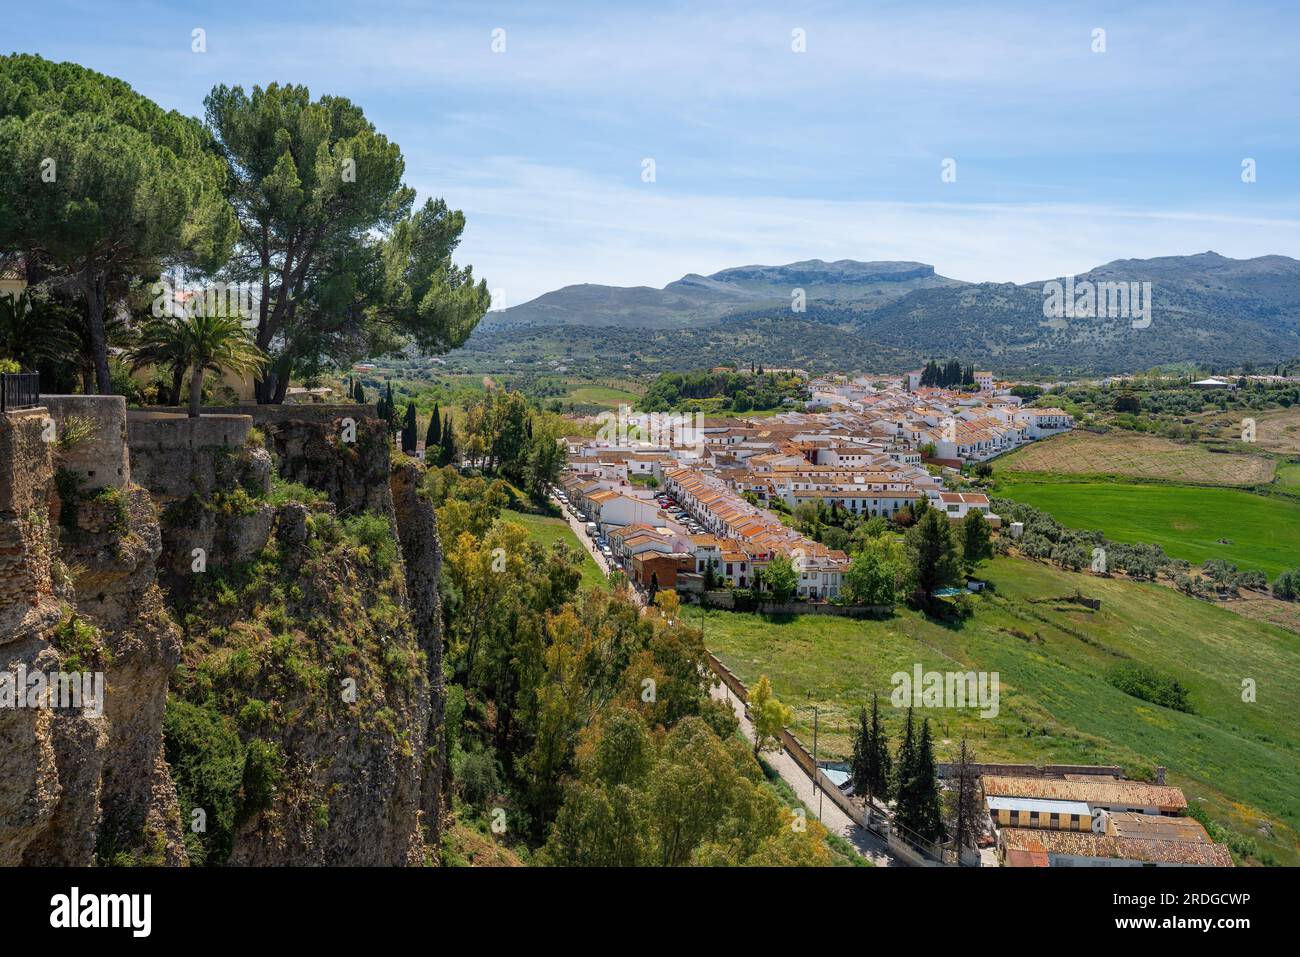 Luftaufnahme von Ronda mit Barrio San Francisco - Ronda, Andalusien, Spanien Stockfoto